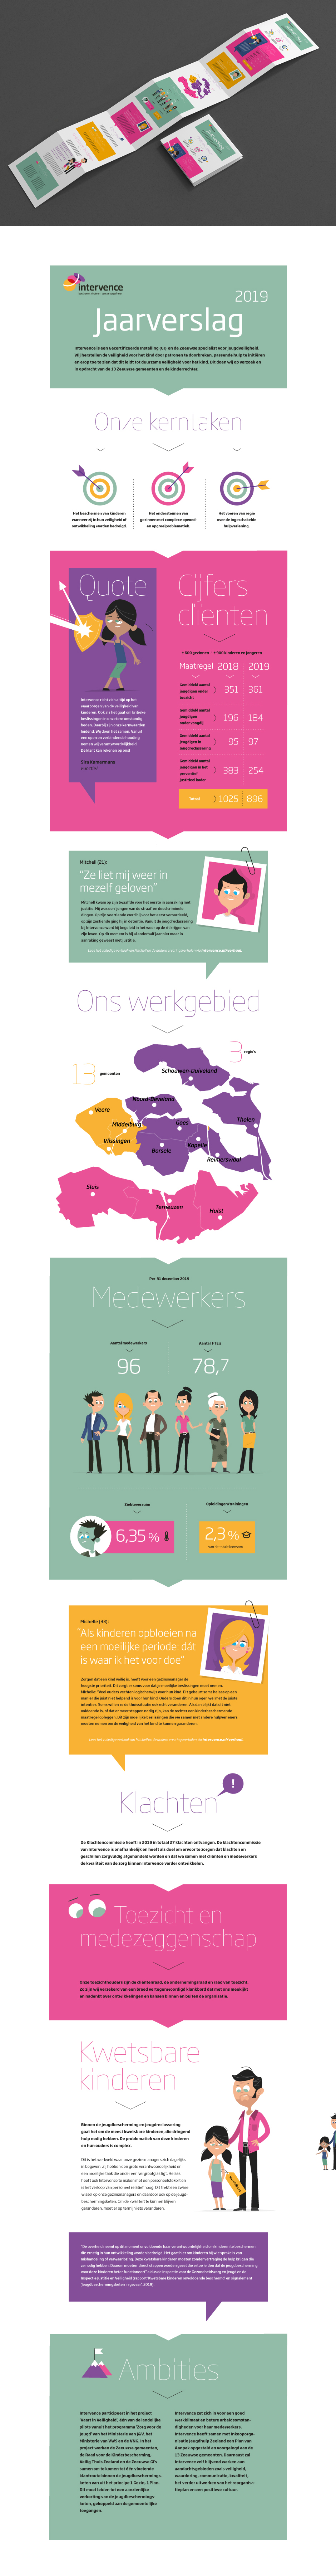 infographic laten maken, animatie laten maken, freelance illustrator, reclamebureau rotterdam, animatie laten maken Rotterdam, infographic laten maken Rotterdam